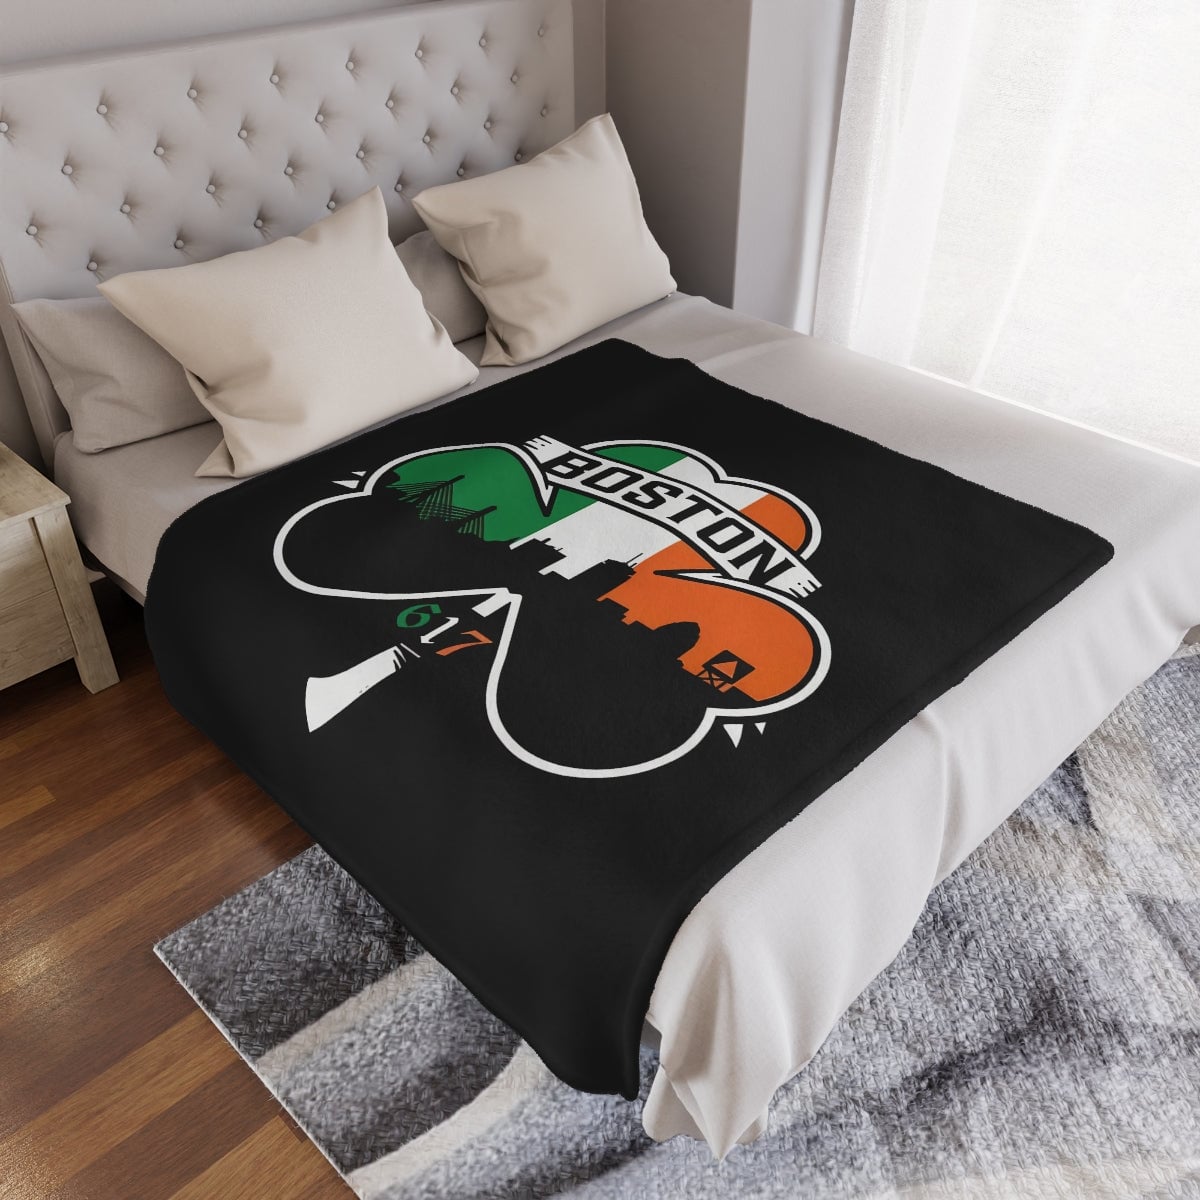 Irish Boston 617 Minky Blanket - Cozy Celtic Charm for Your Home